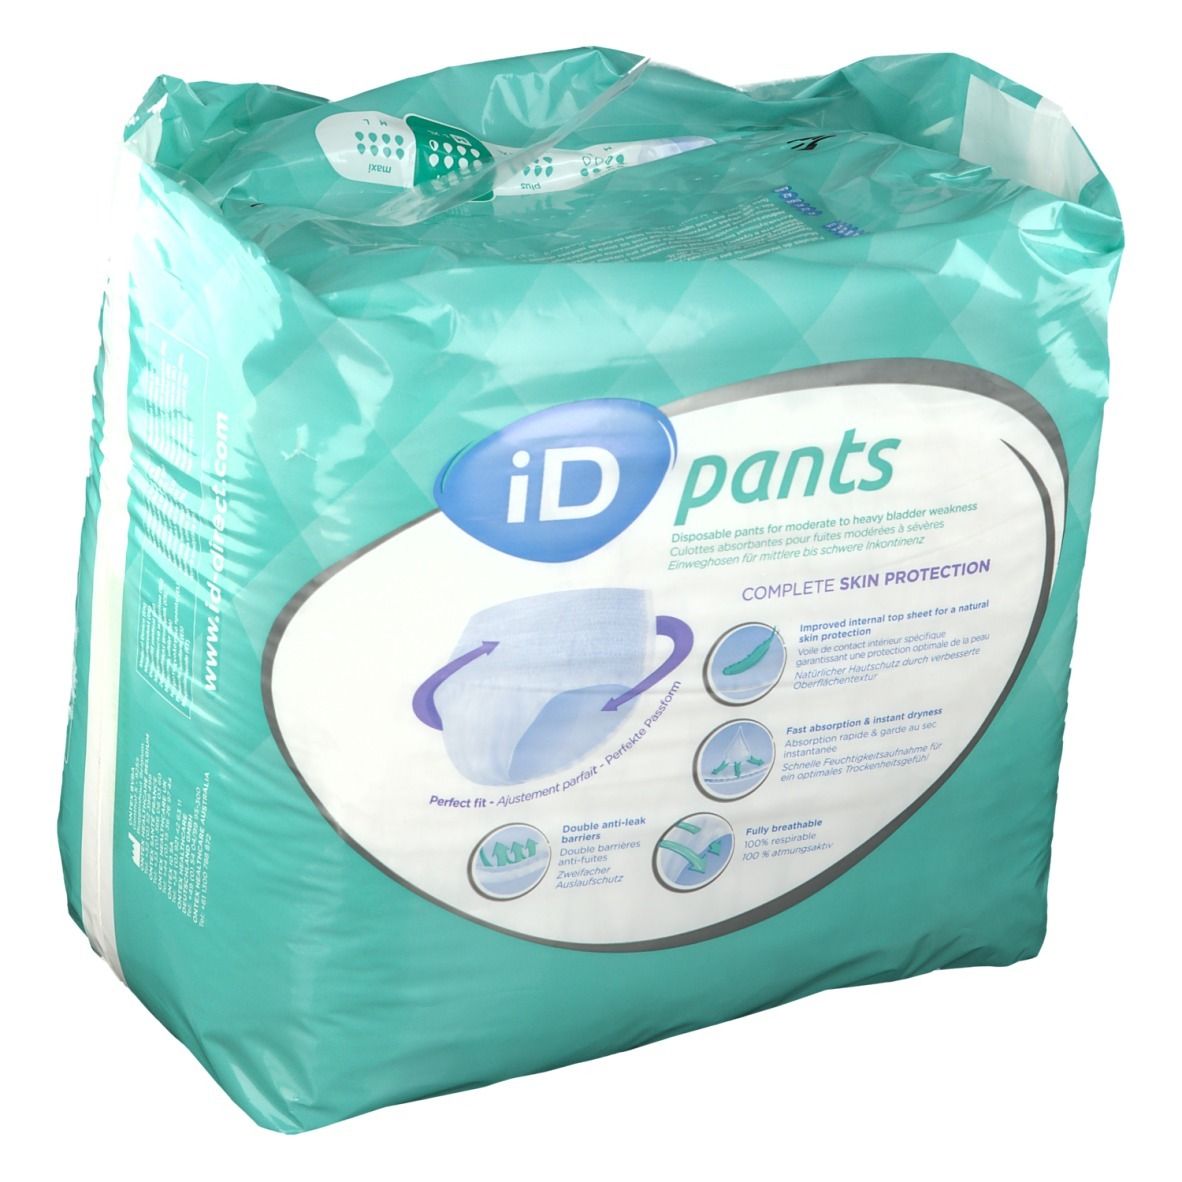 iD Pants Complete Skin Protection Super Medium